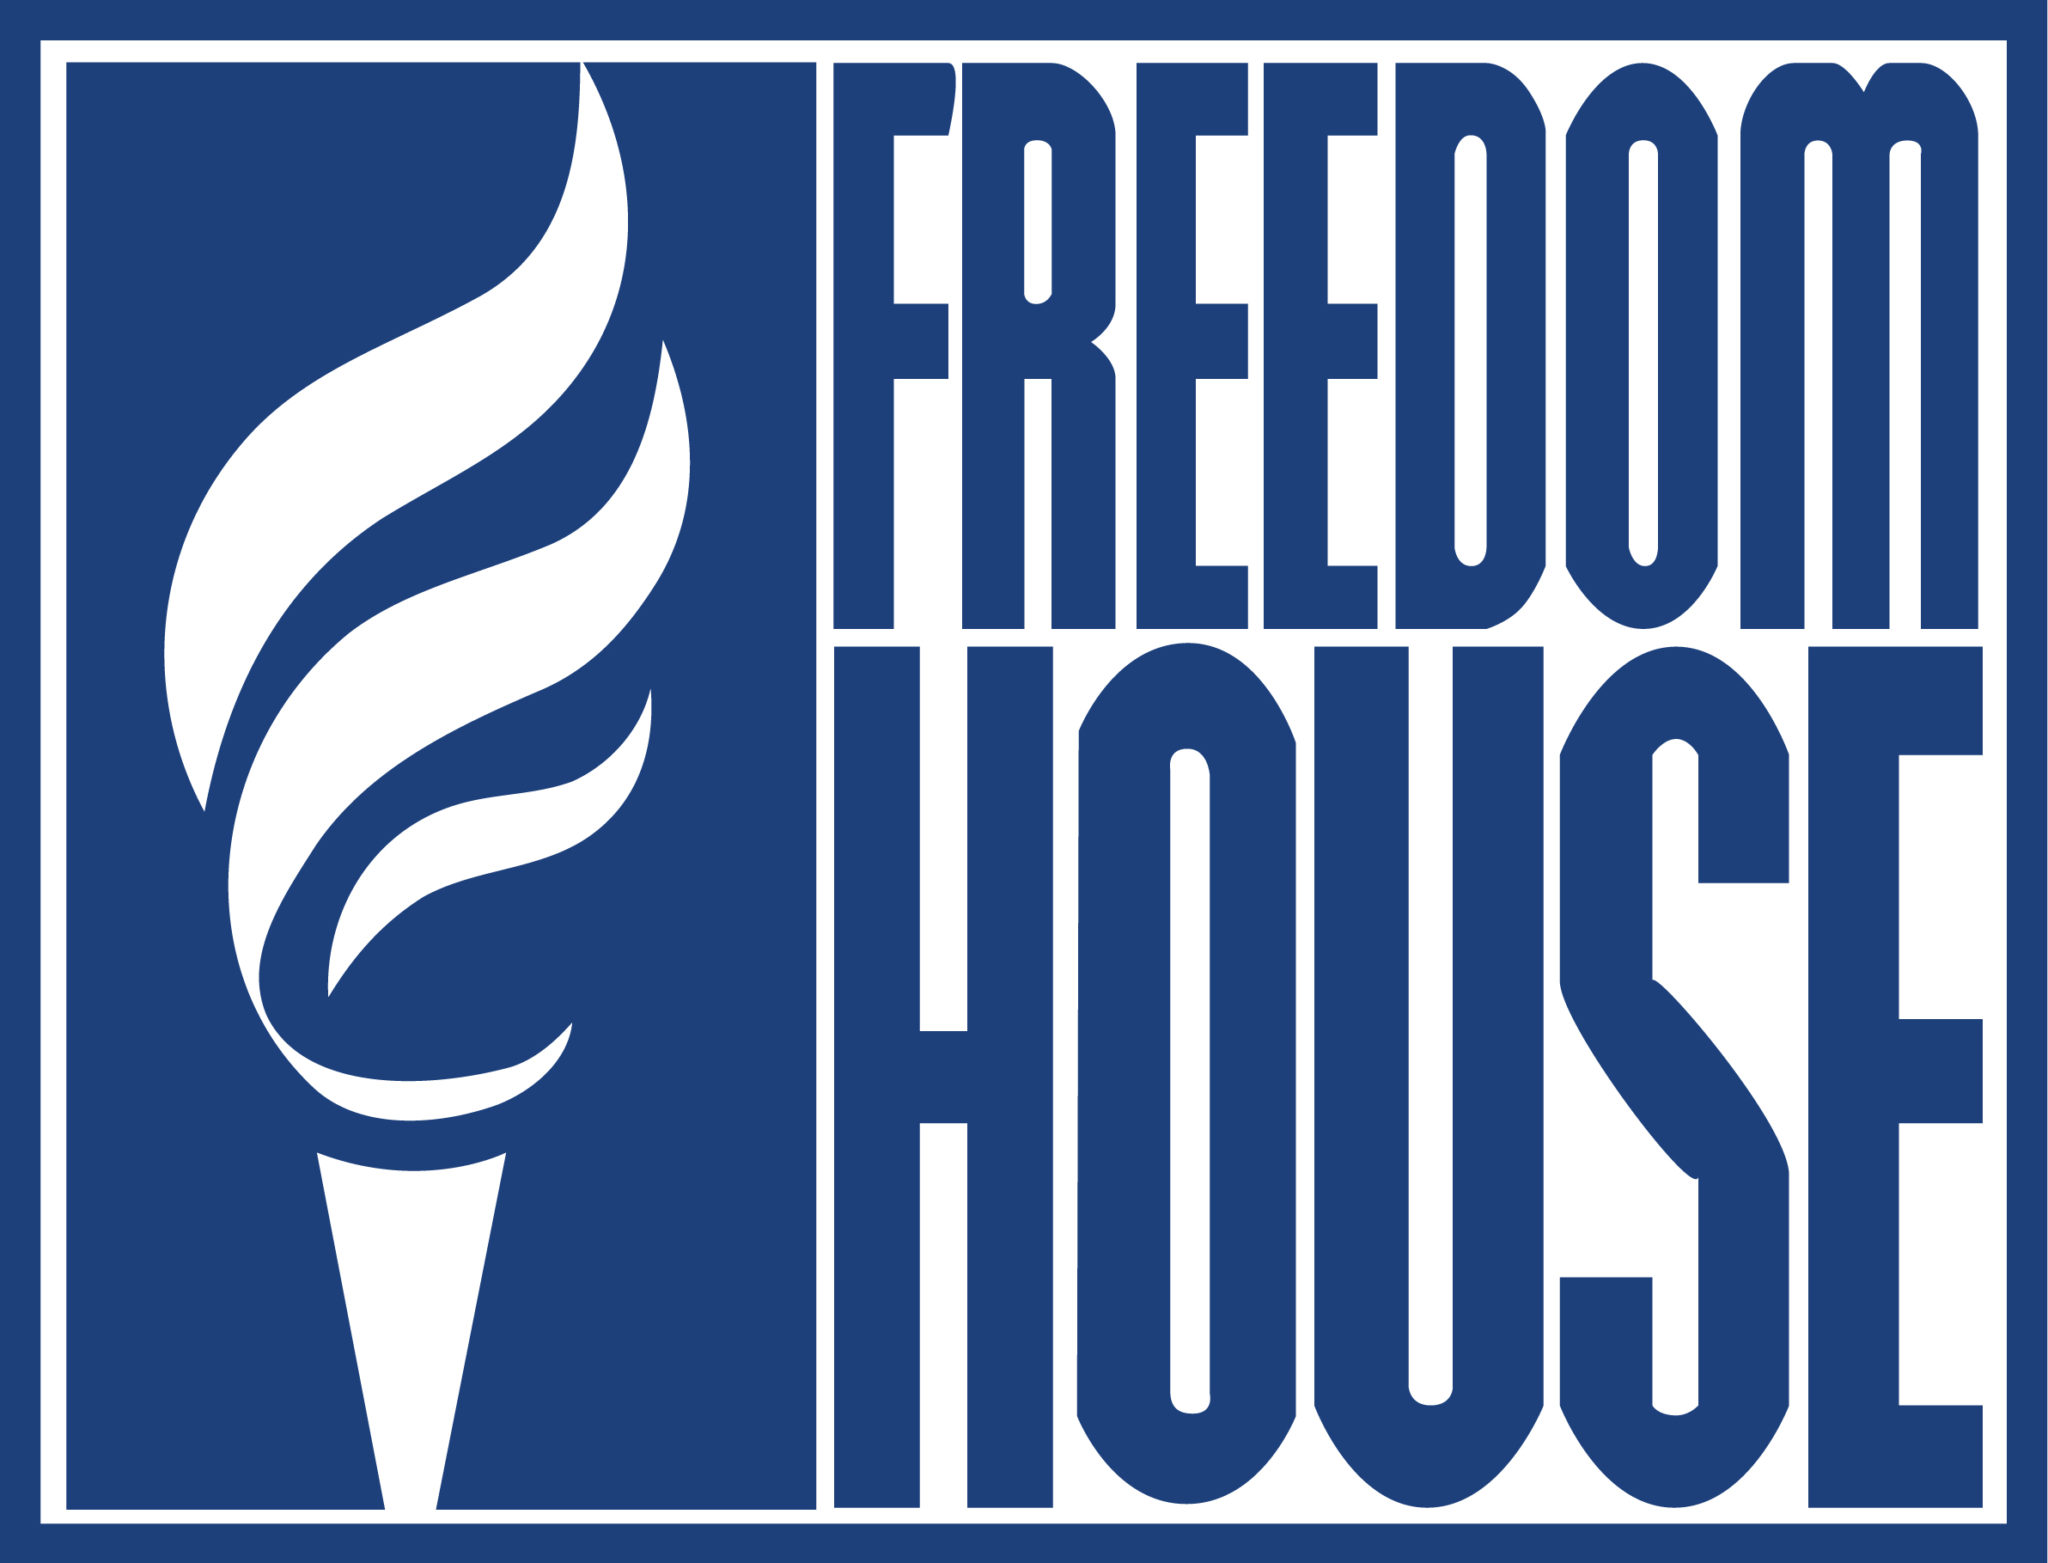 Freedom House-ն իր զեկույցում նշել է Հայաստանում տեղեկատվության վերահսկման հետ կանչված փոփոխությունները